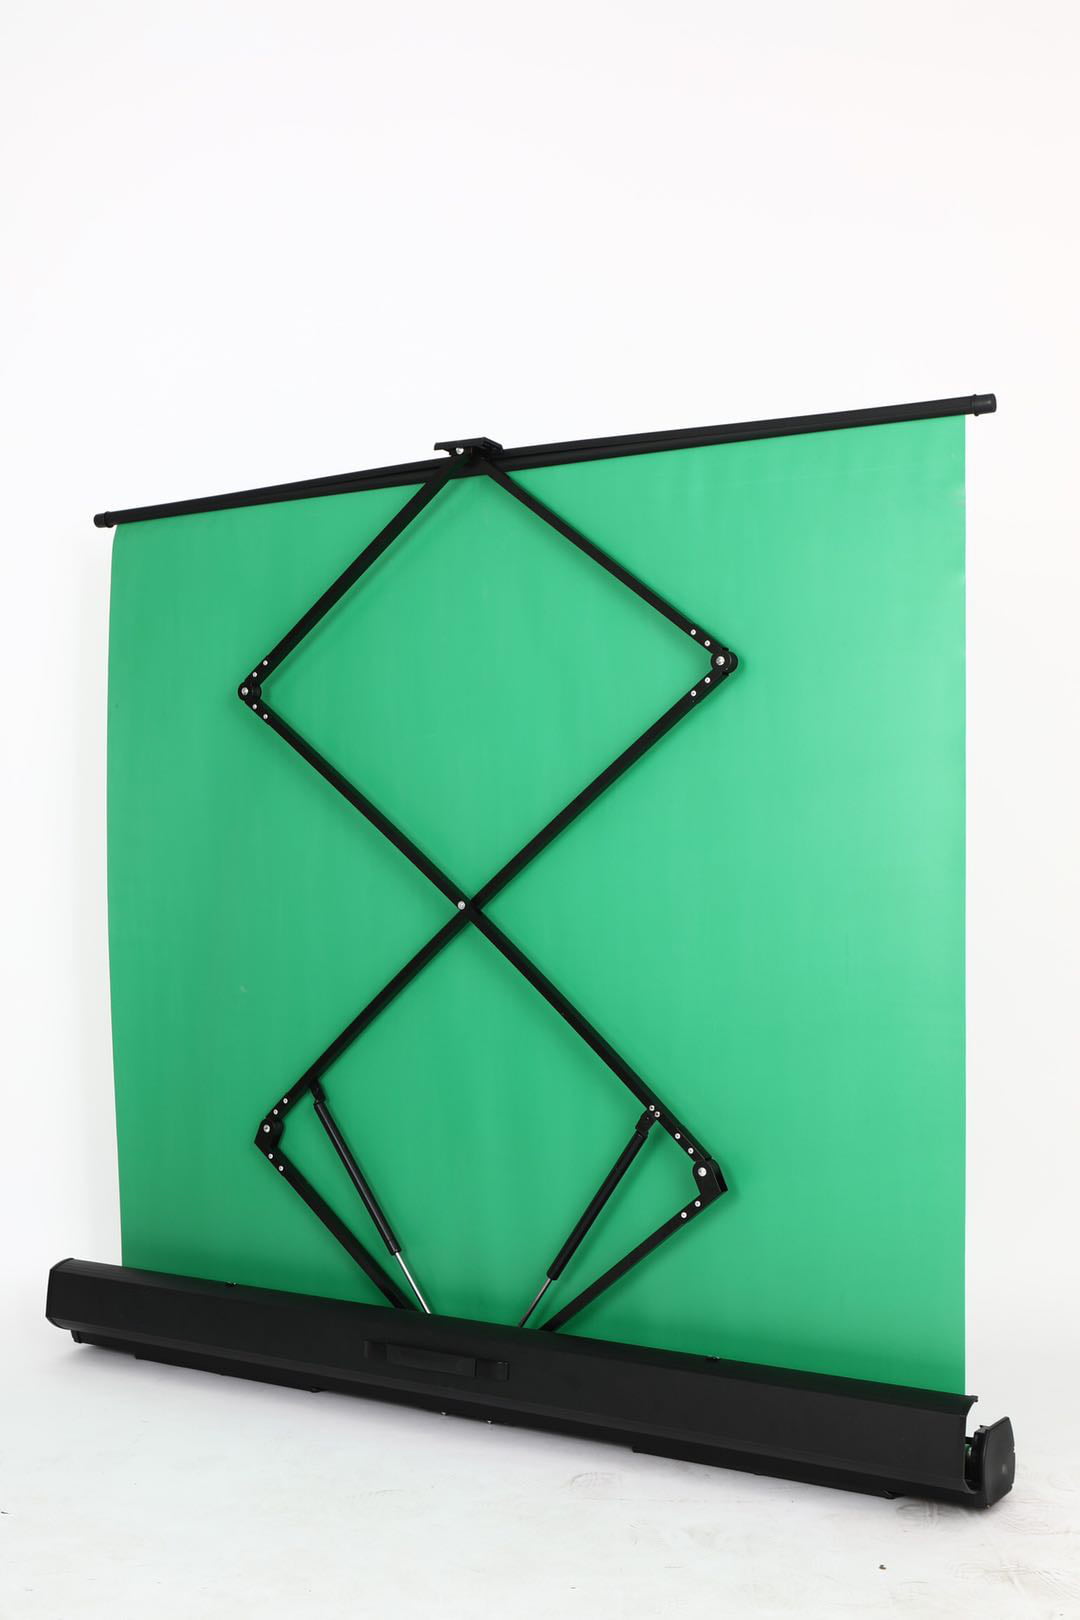 APEX Portable Rollup Chroma Green Screen Background Stand 150 x 200cm –  Apex Digital